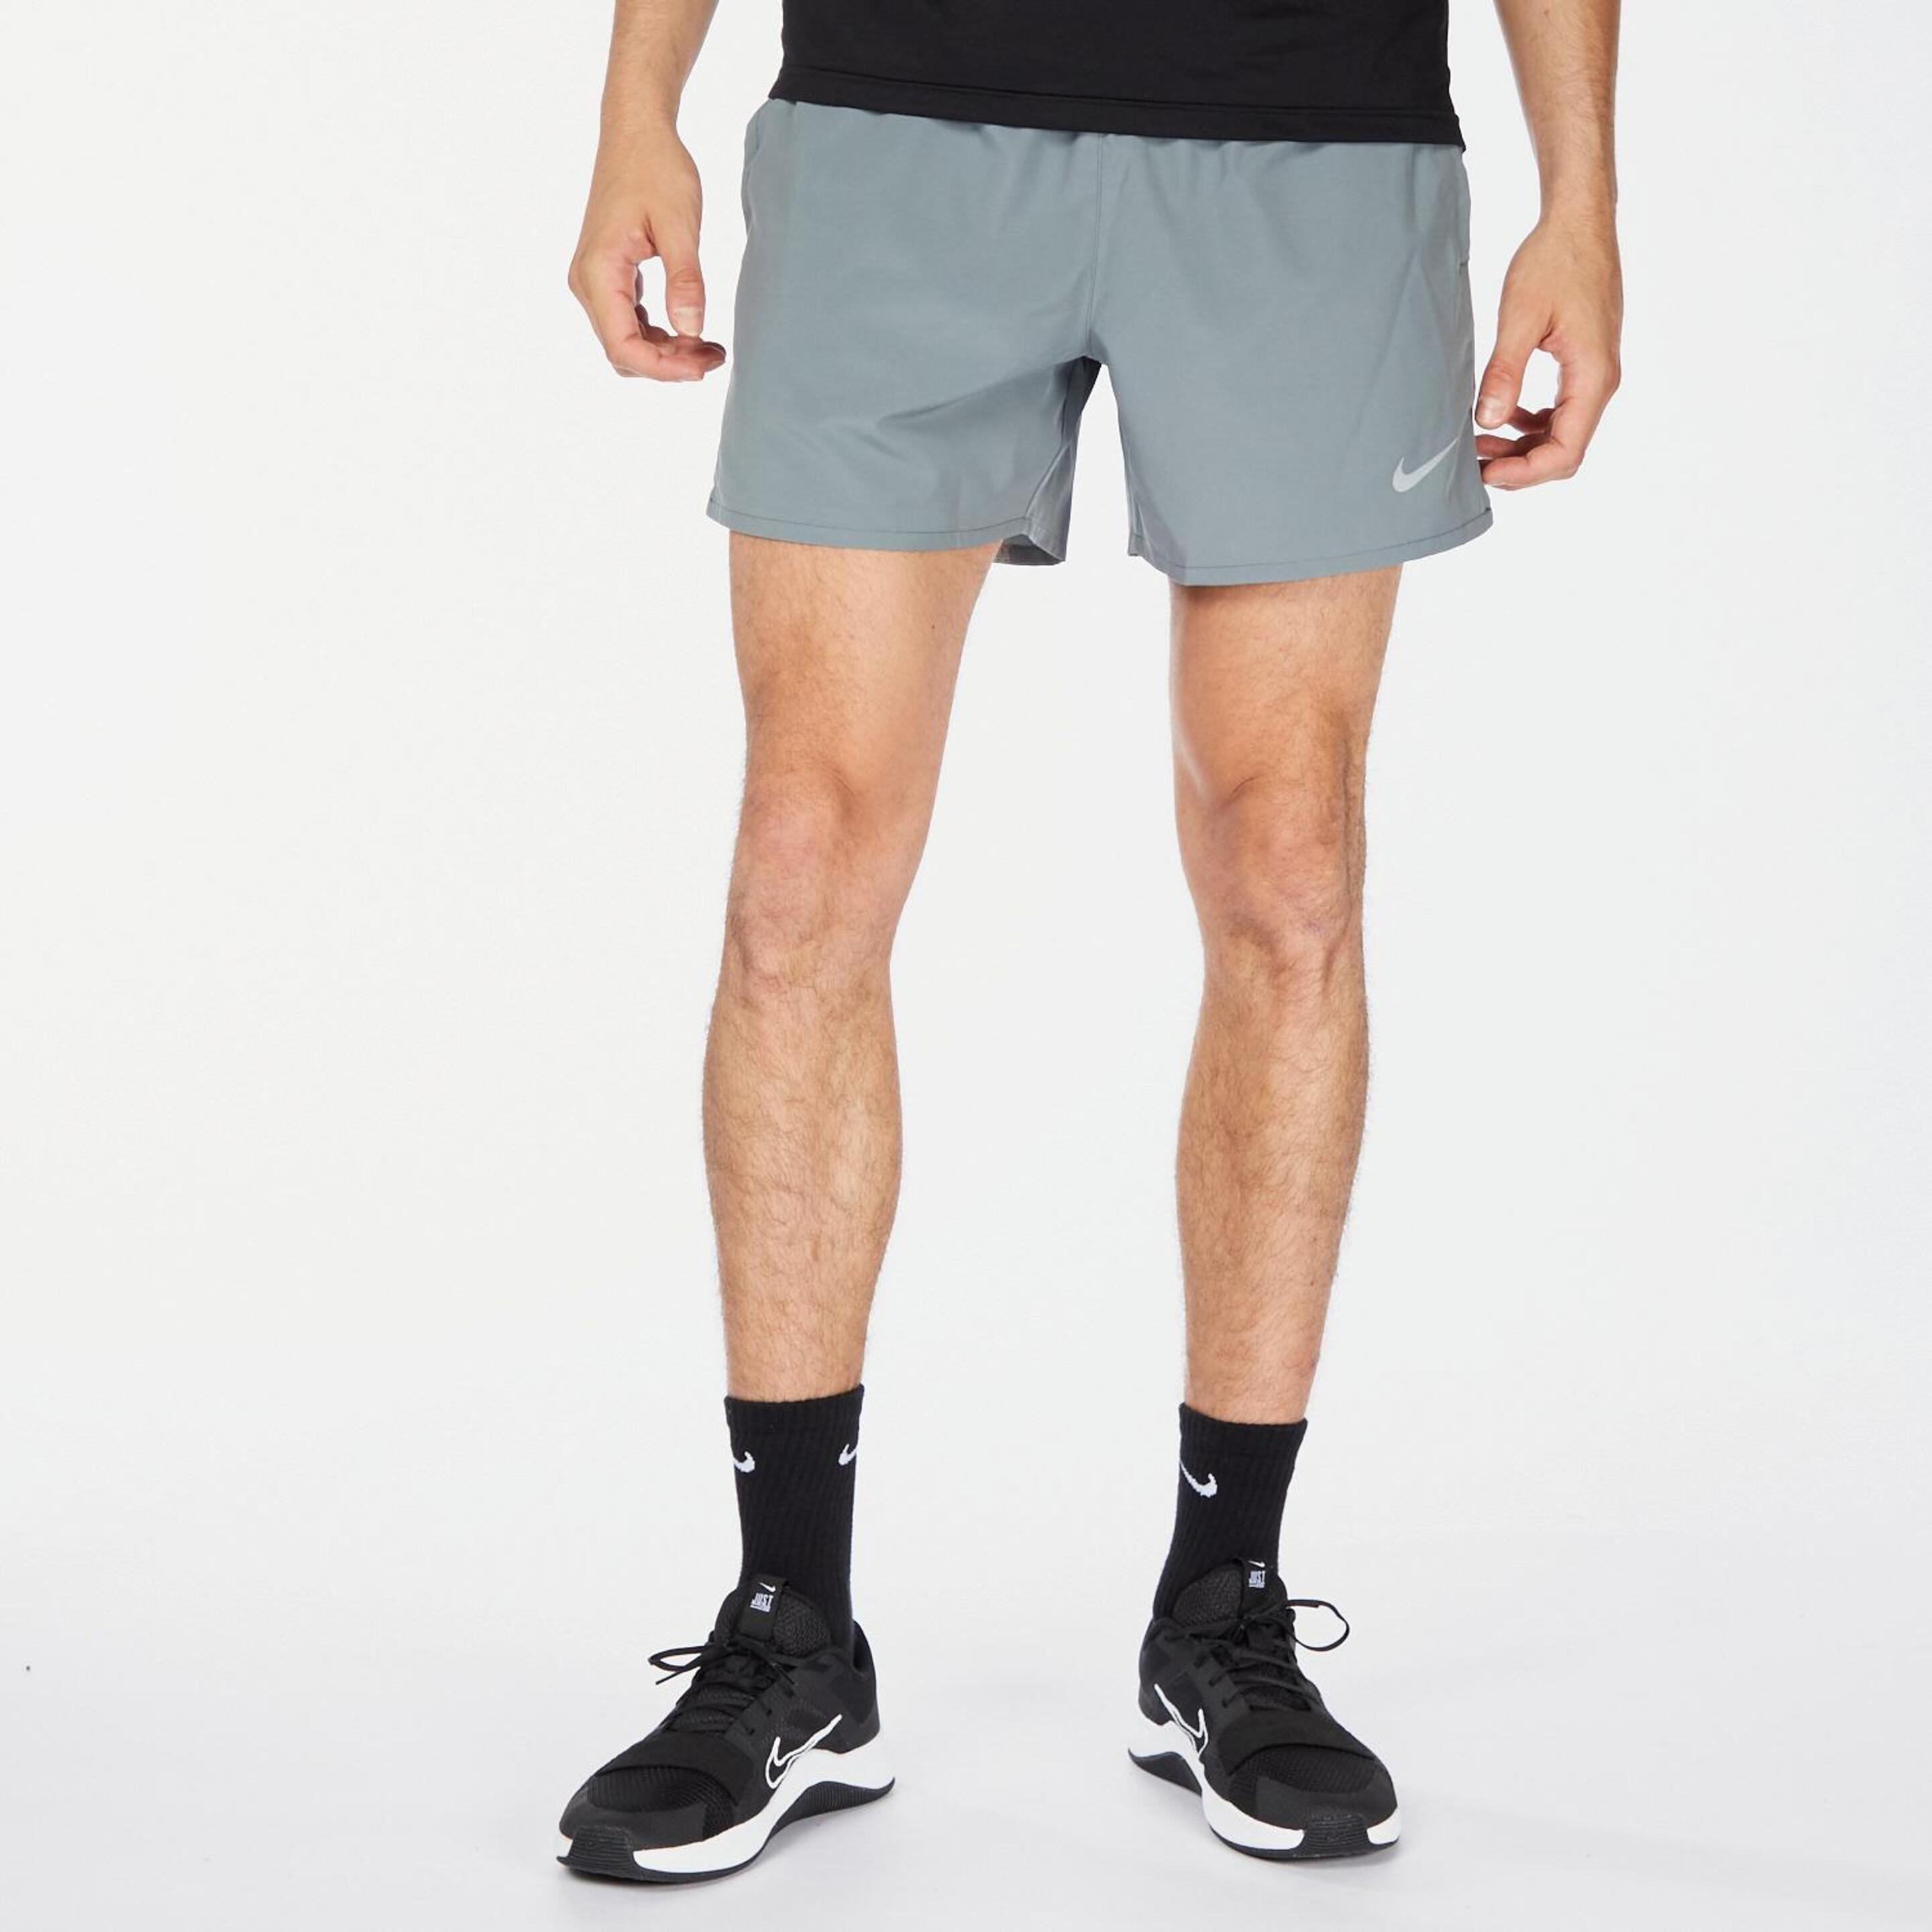 Nike Challenger - gris - Calções Running Homem